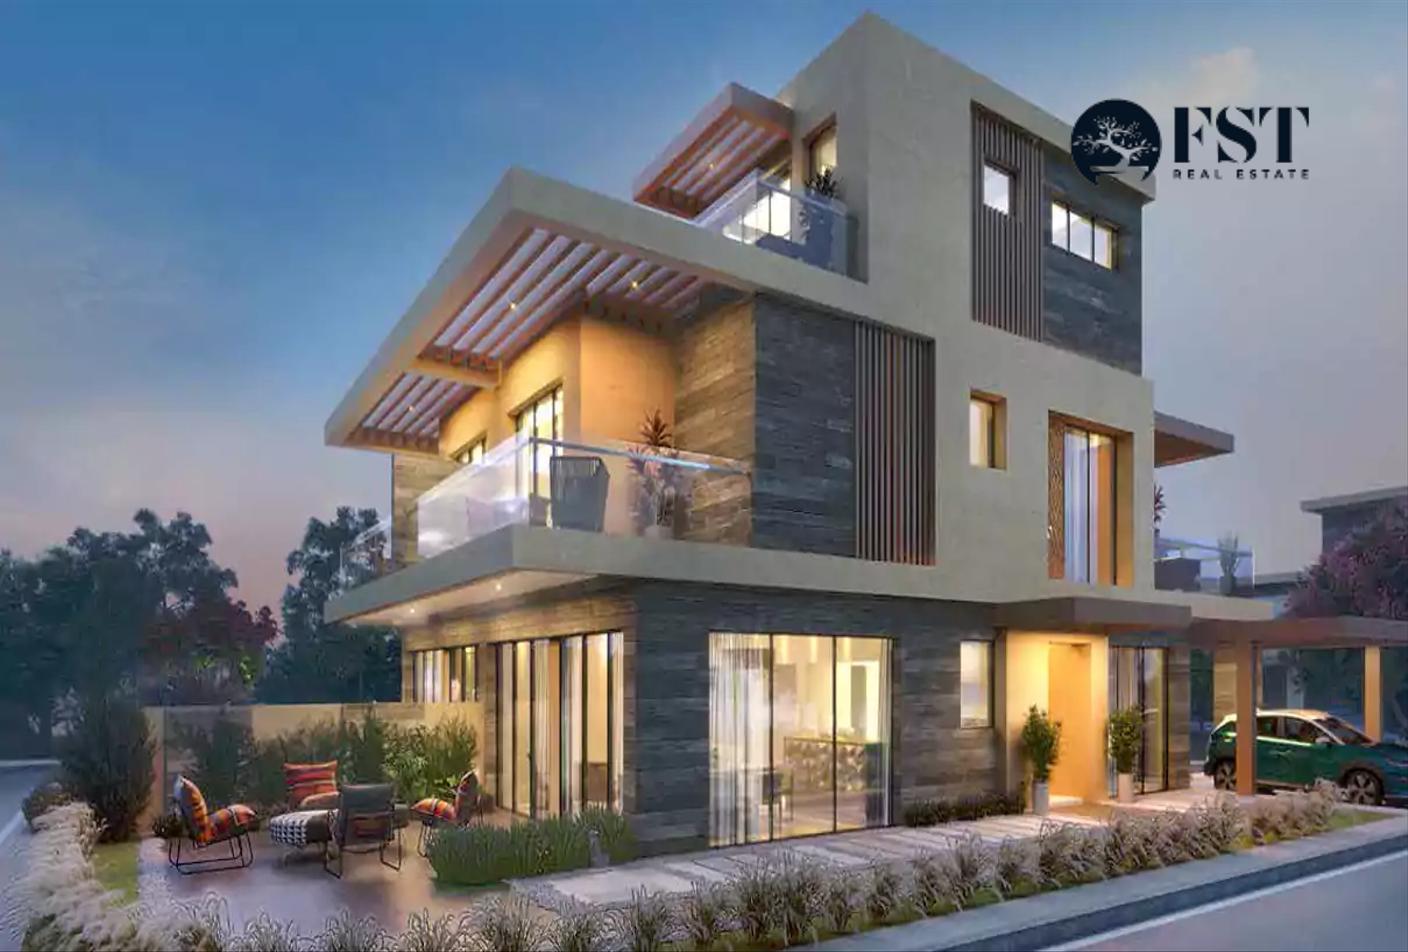 5 bed, 6 bath Villa for sale in Belair Damac Hills - By Trump Estates, DAMAC Hills, Dubai for price AED 3360000 